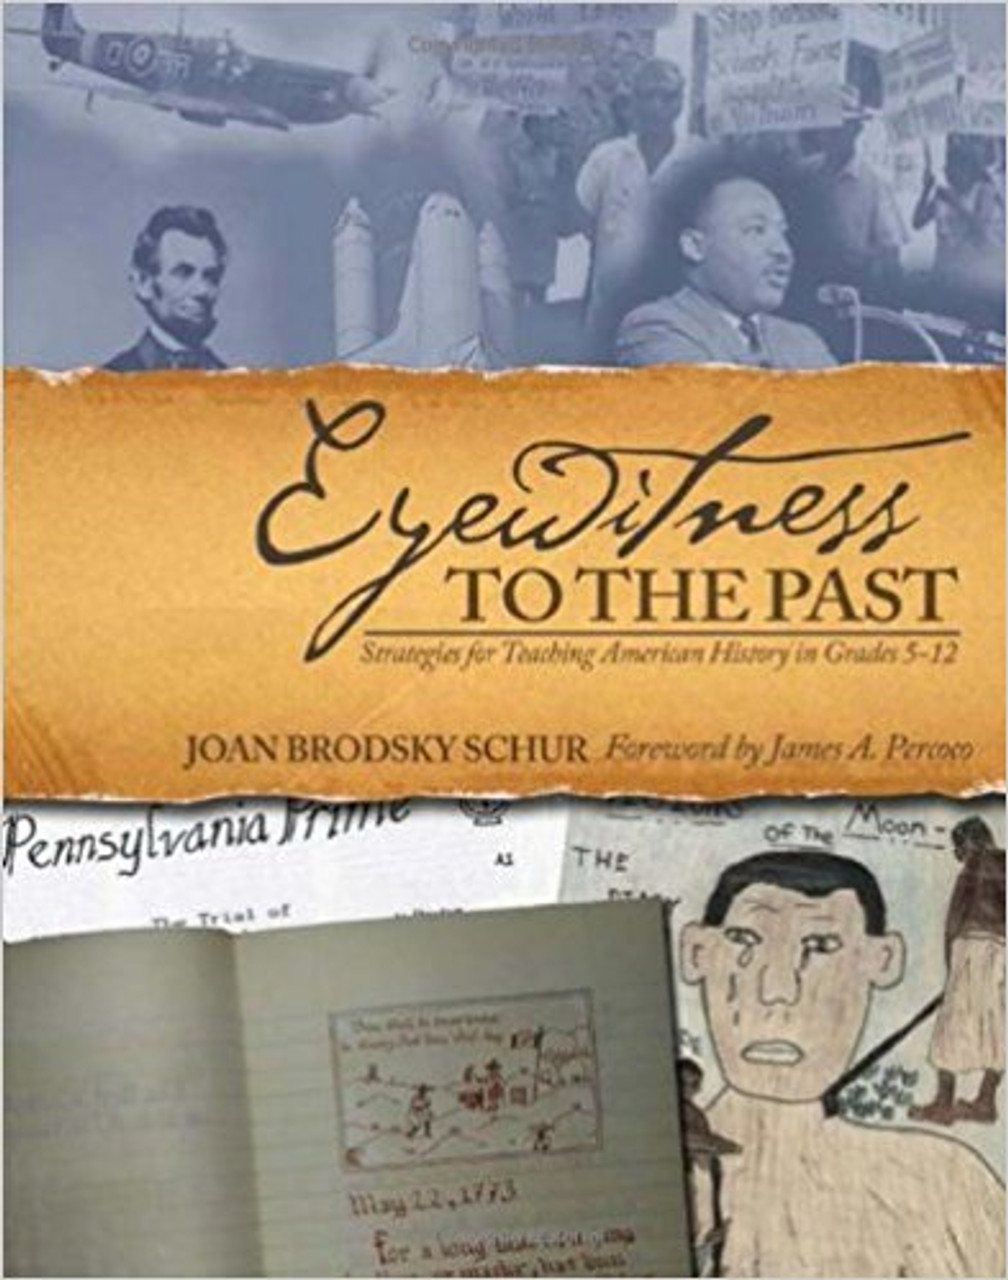 Eyewitness to the Past: Strategies for Teaching American History in Grades 5-12 by Joan Brodsky Schur